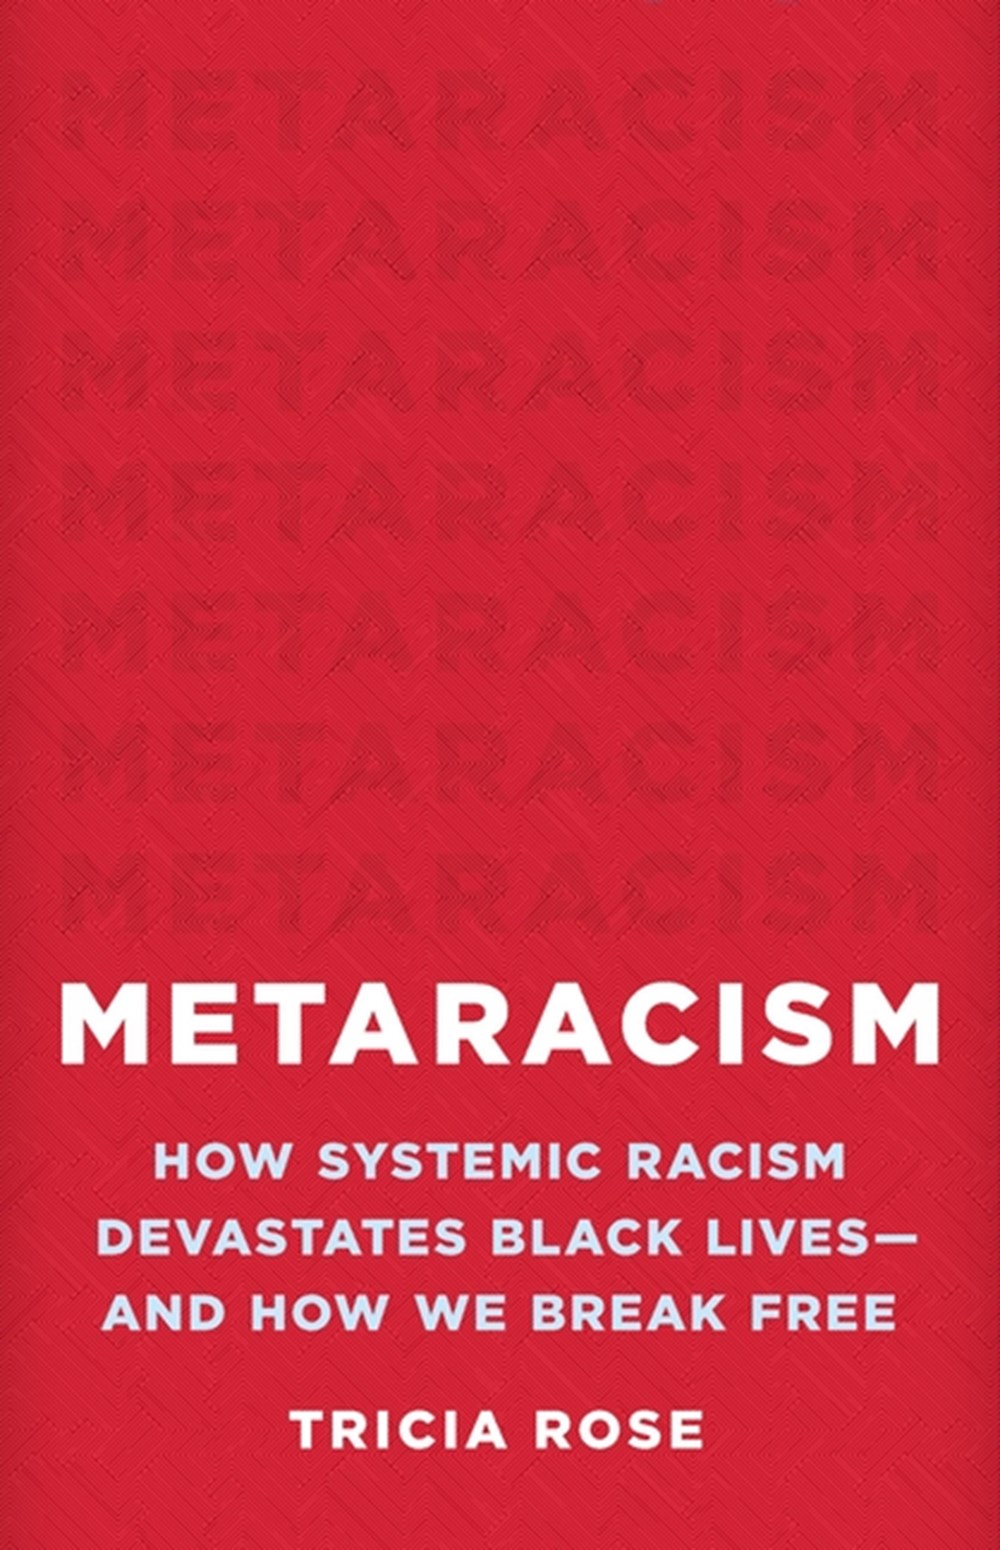 Metaracism: How Systemic Racism Devastates Black Lives--And How We Break Free